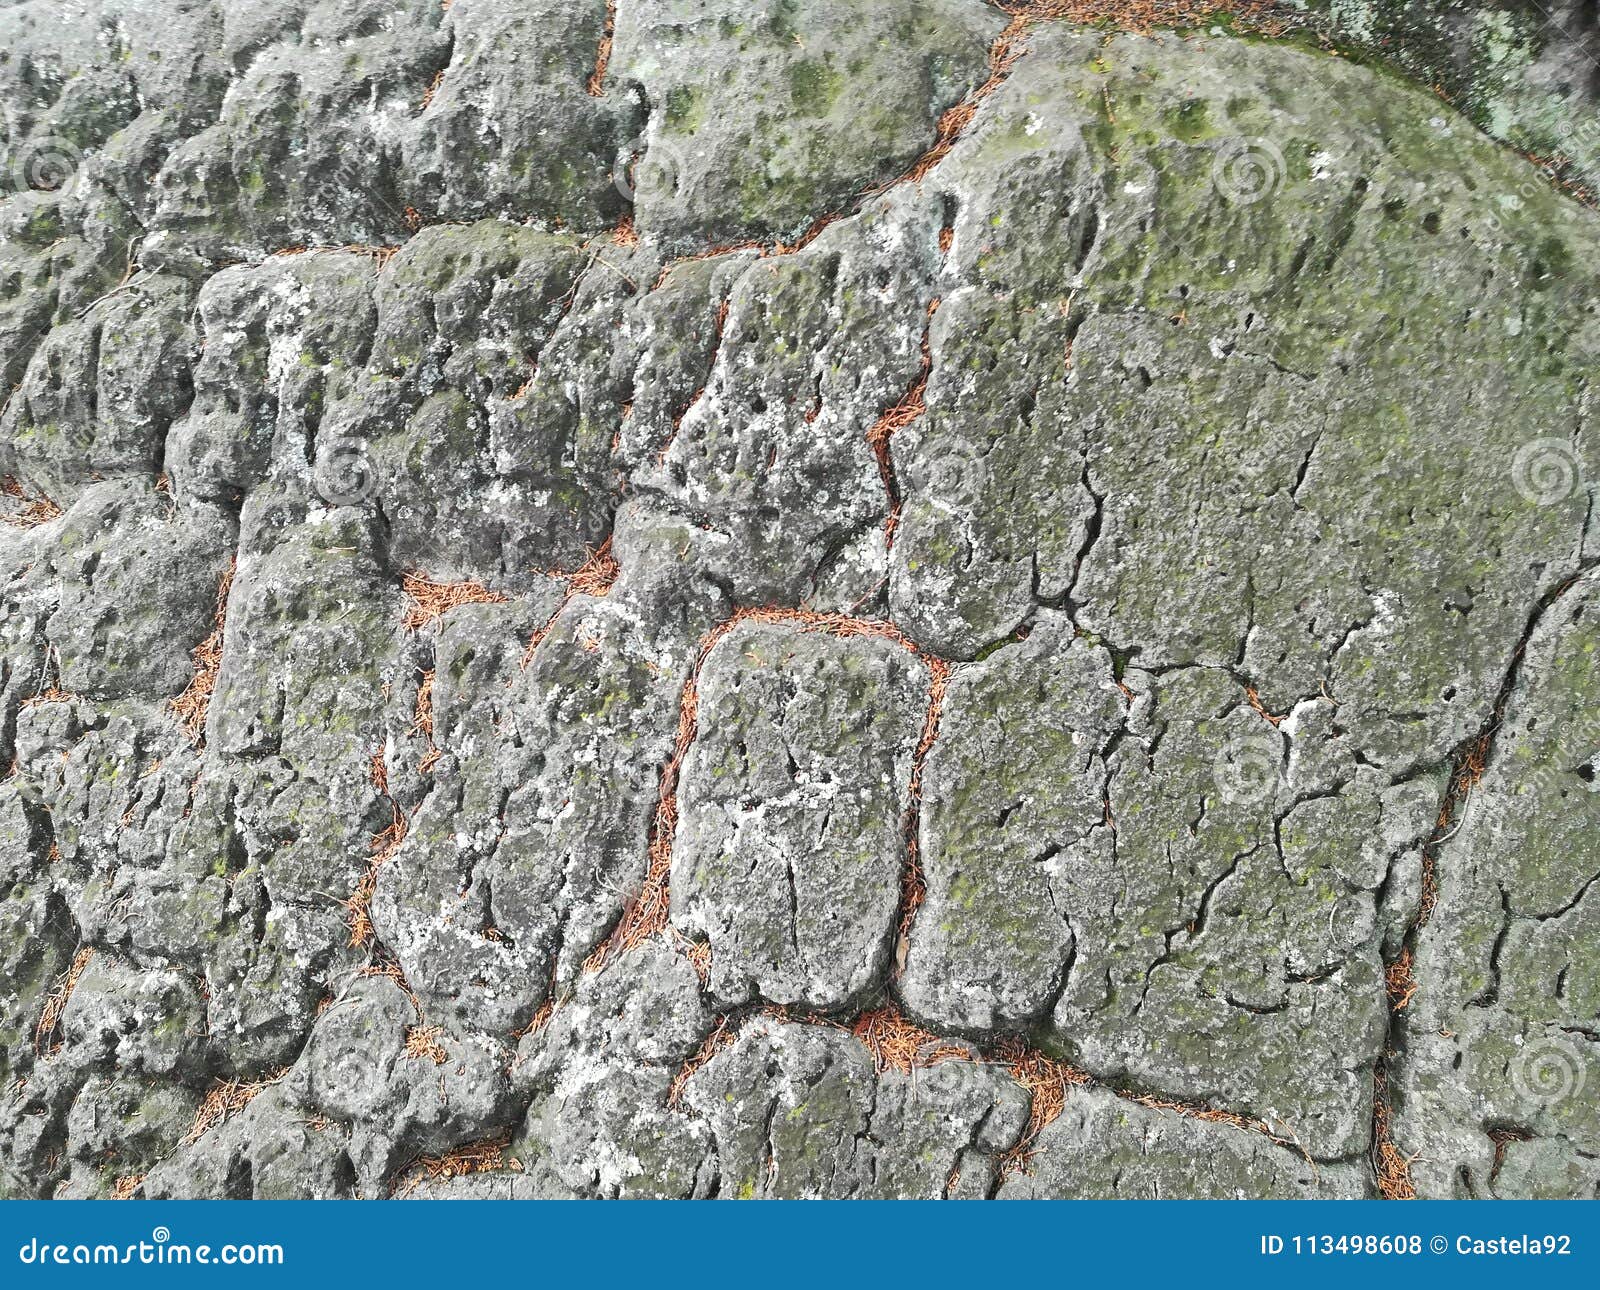 rock rough texture lichen smooth forms